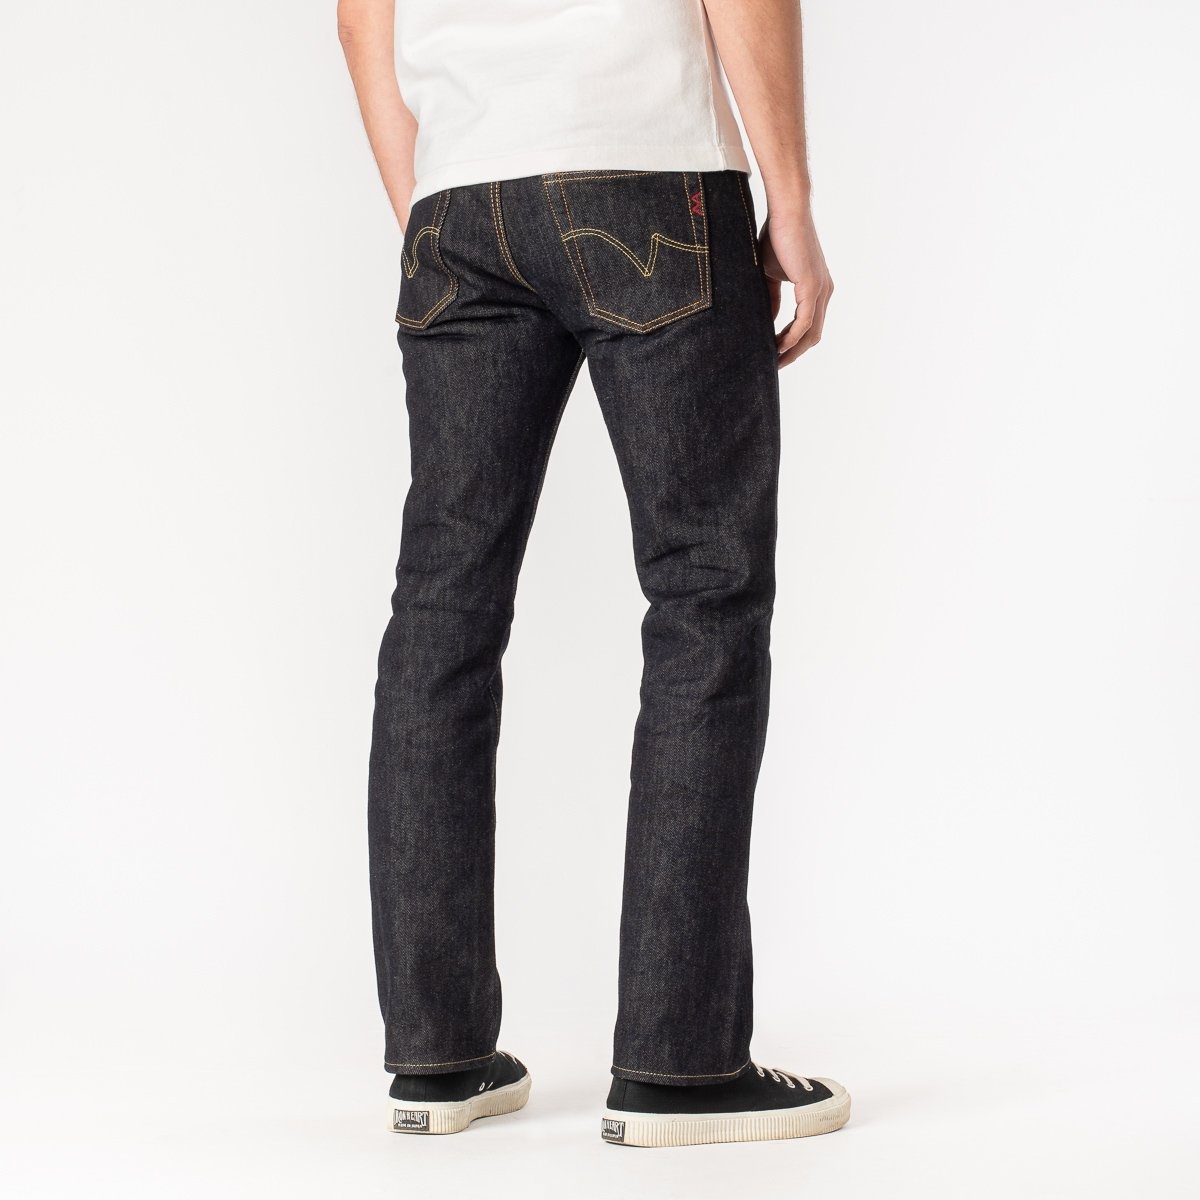 IH-666S-21 21oz Selvedge Denim Slim Straight Cut Jeans - Indigo - 3